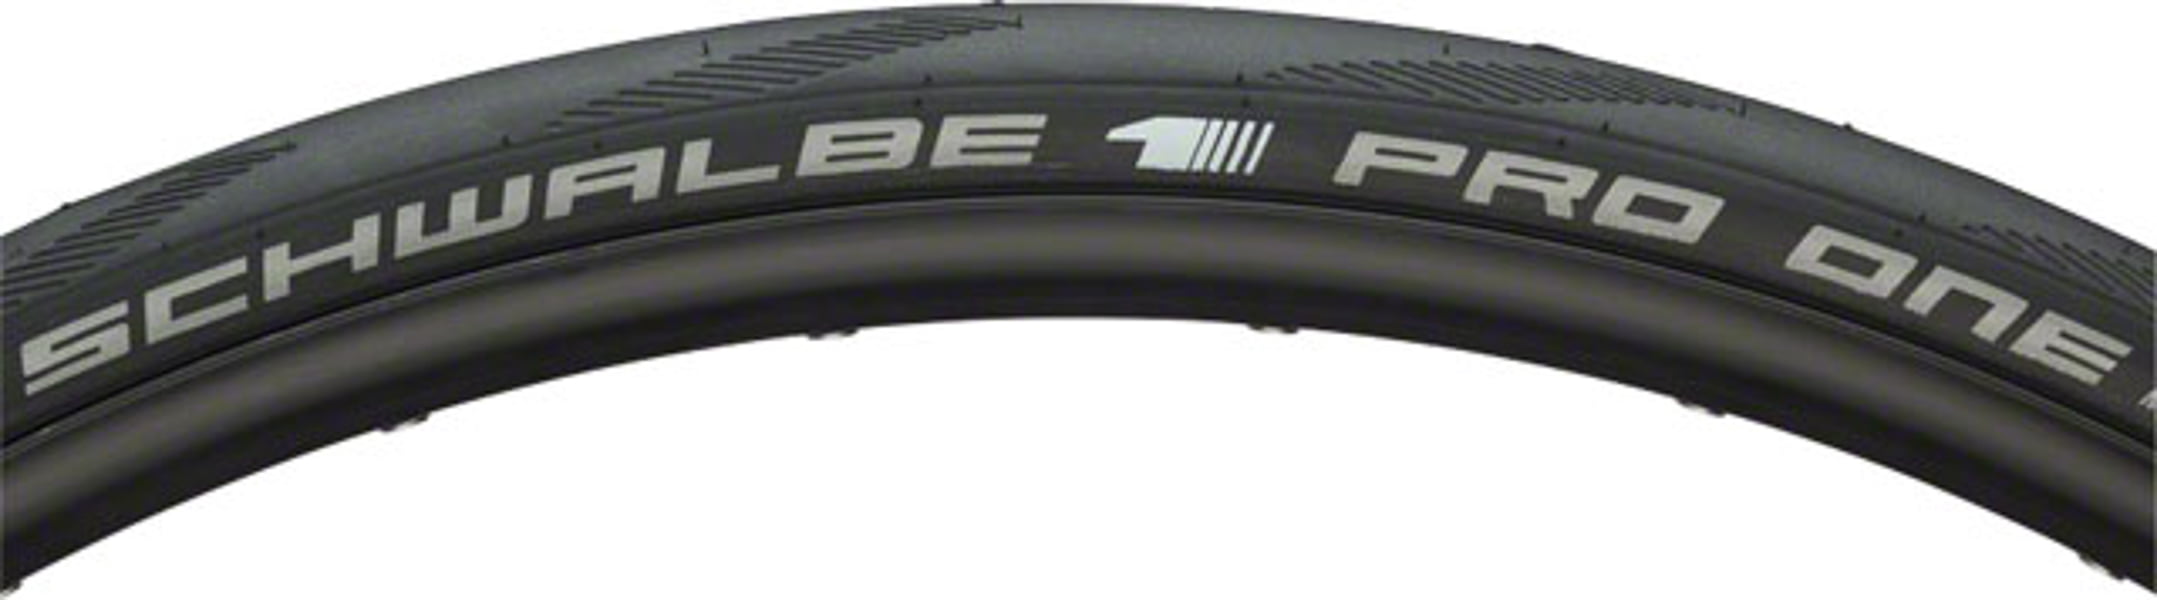 tubeless road tires 700 x 28